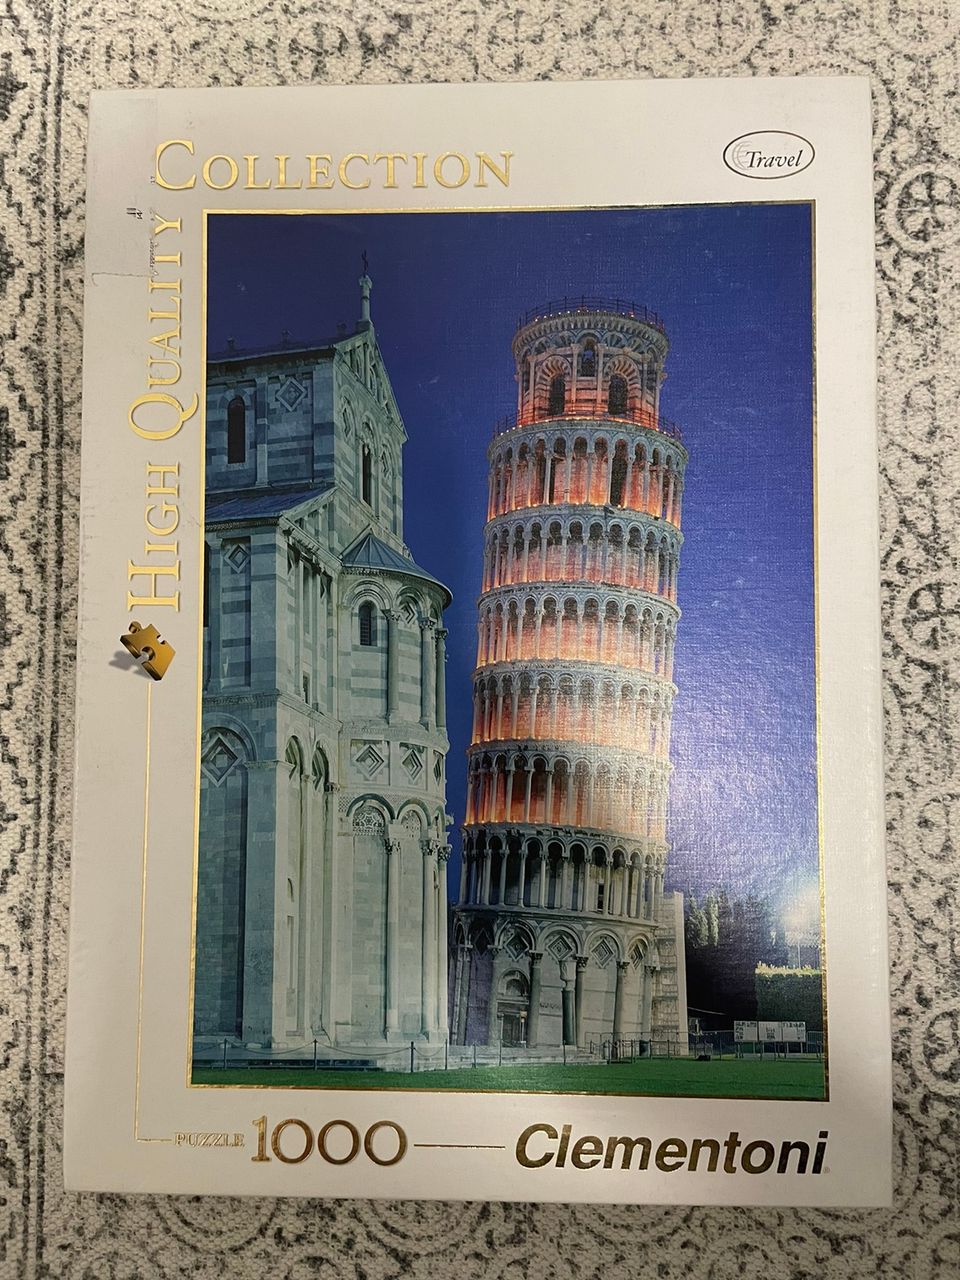 1000 palan palapeli Pisan kalteva torni